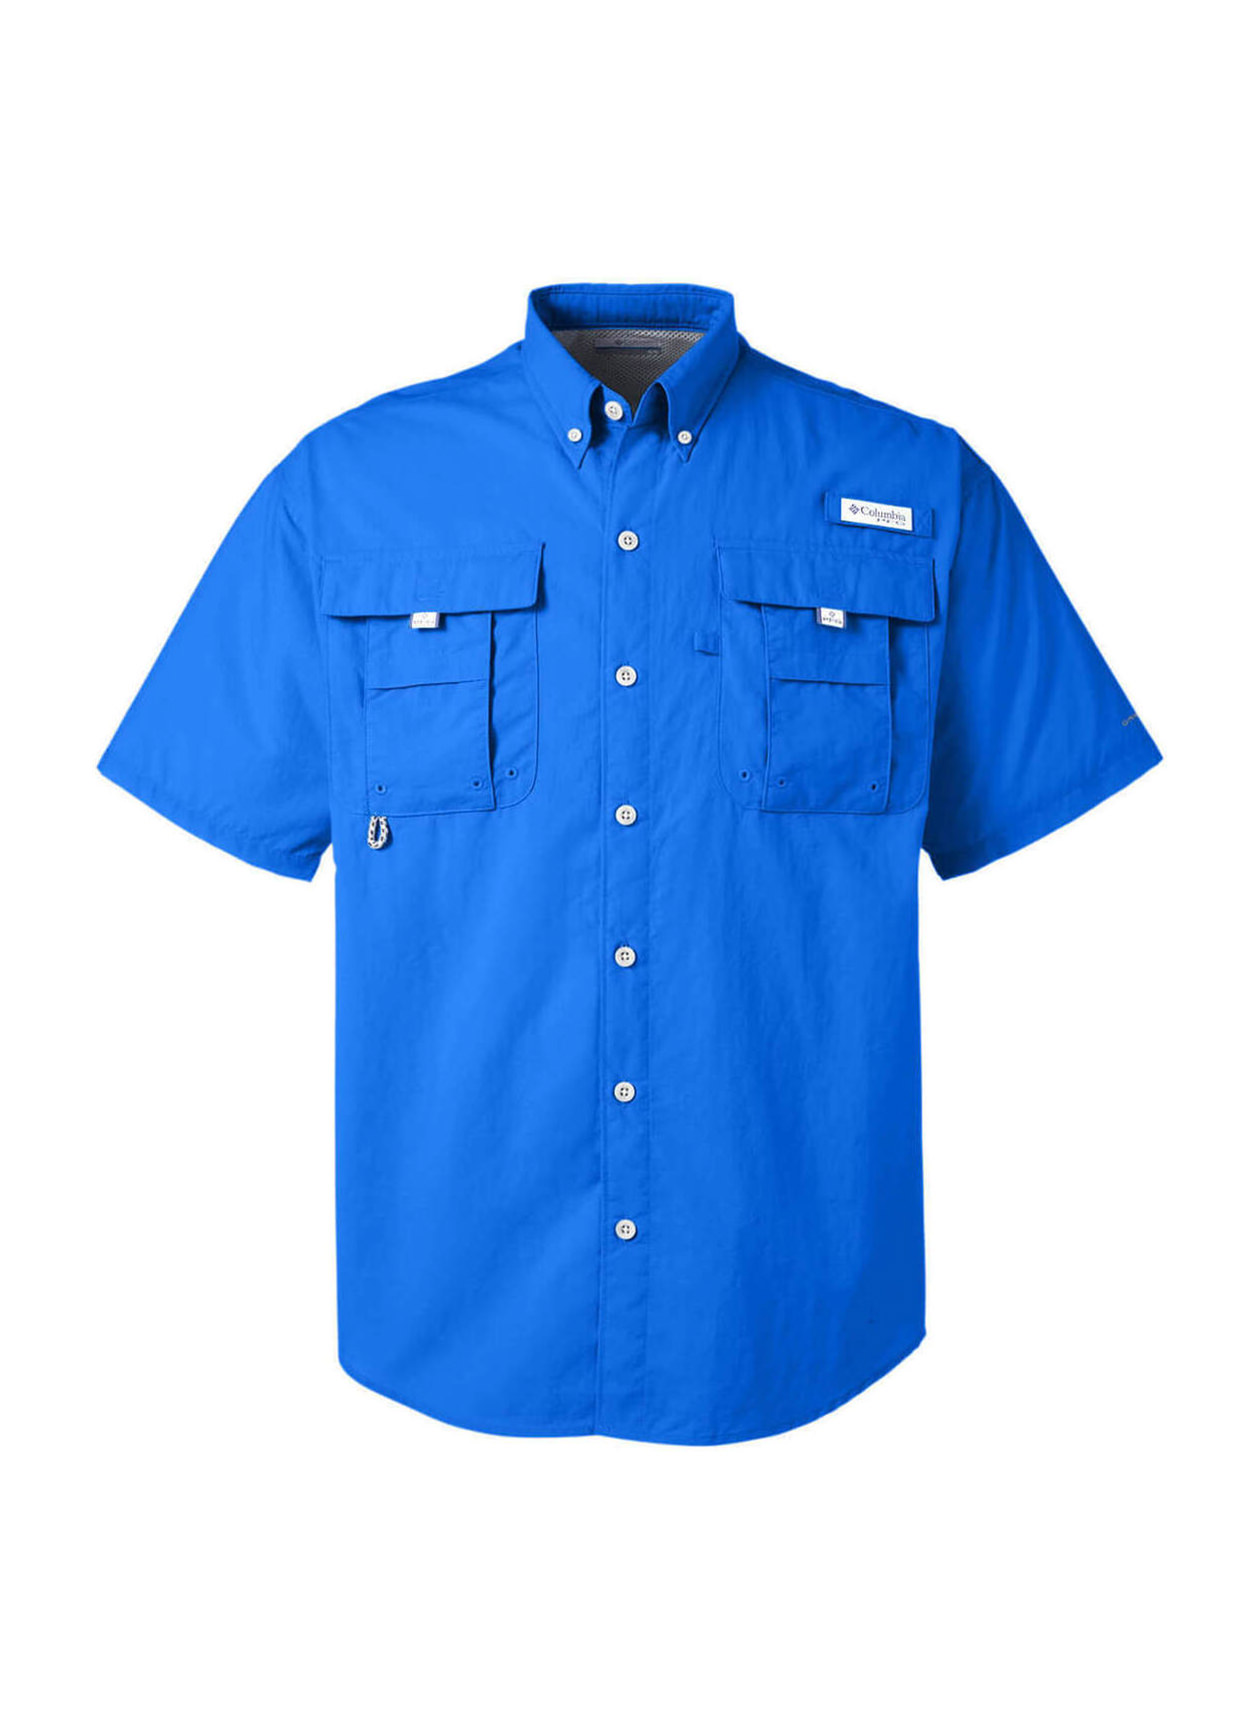 2 Duluth Trading BLUE & Tan CoolPlus Short Sleeve Vented Fishing Shirts XL